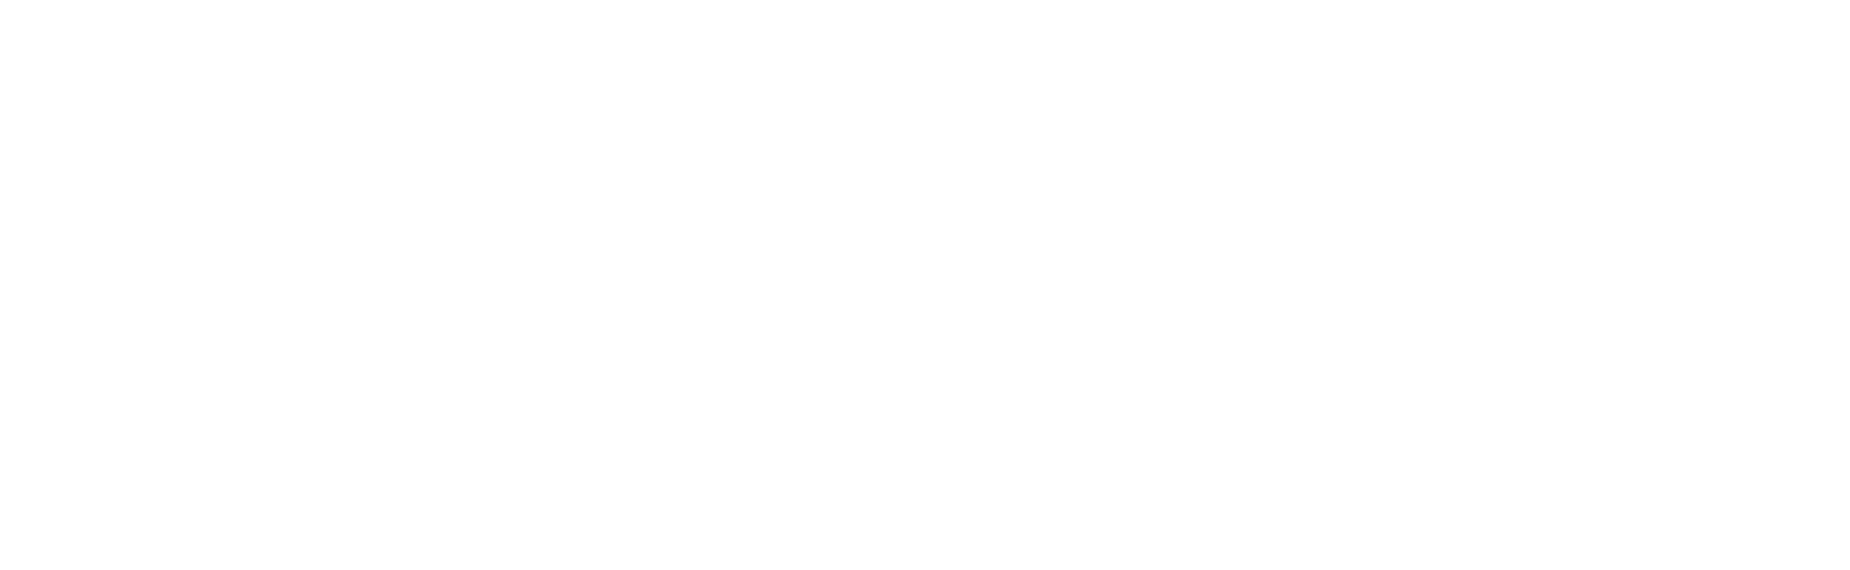 mfa tech logo